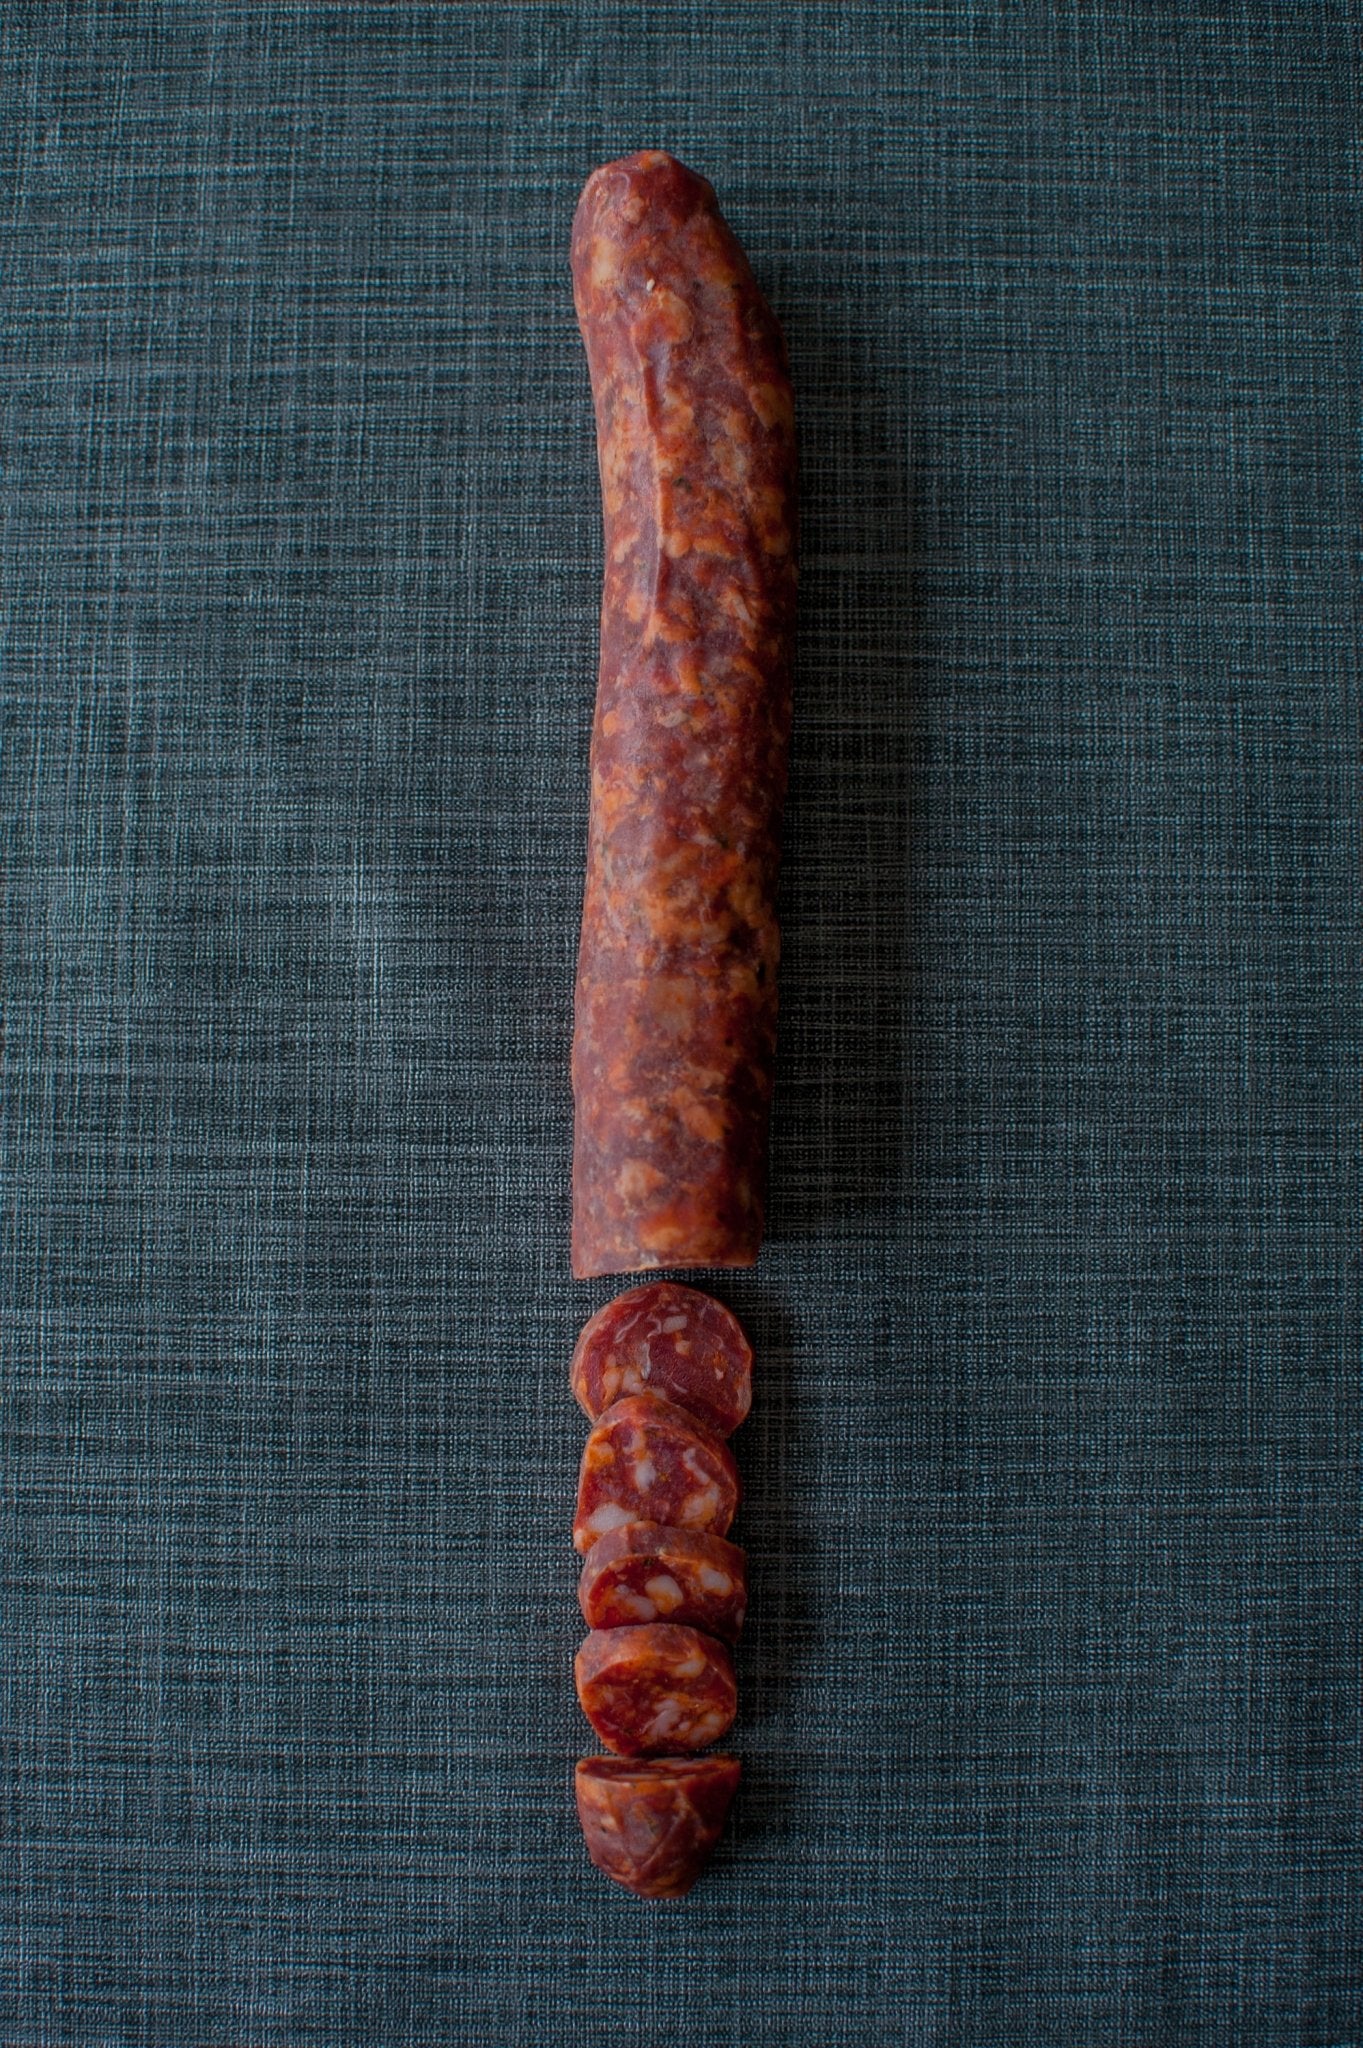 Chorizoworst - Eerlijk Vlees Groep B.V.